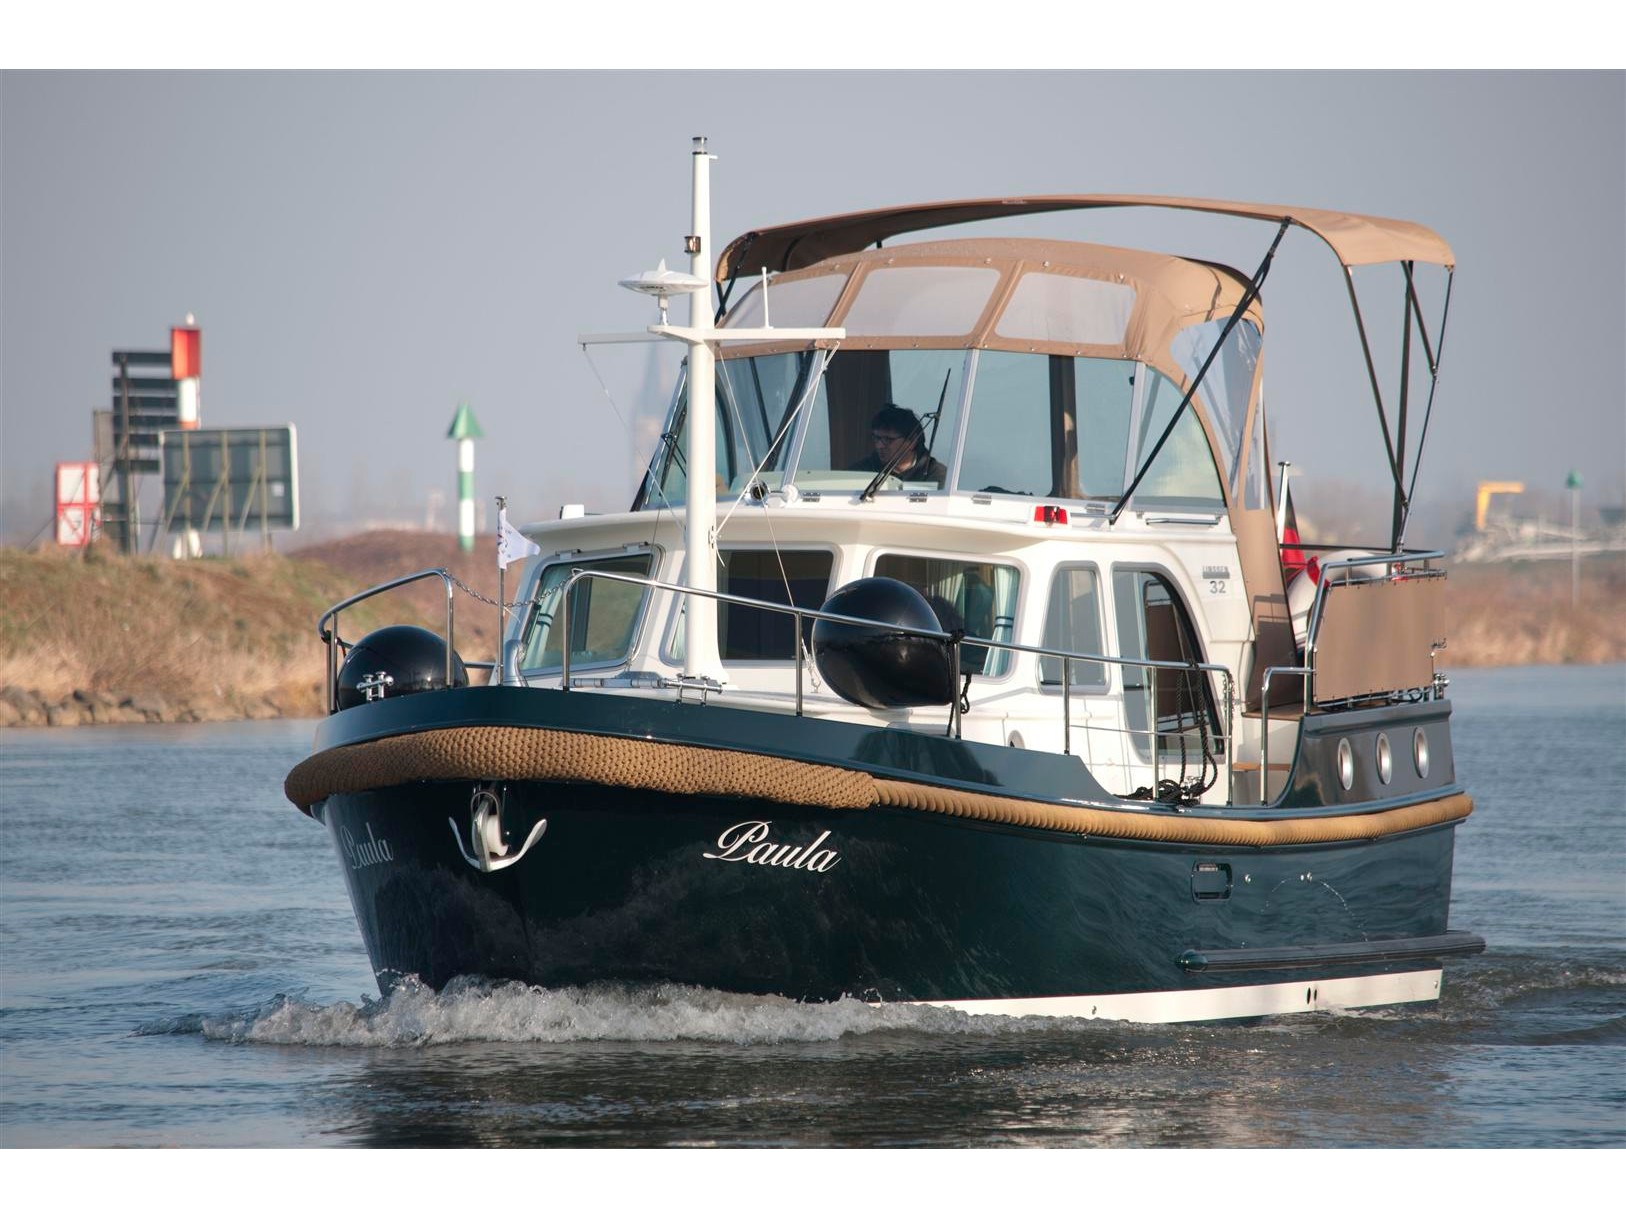 Linssen Classic Sturdy 28.9 Sedan - Motor Boat Charter Germany & Boat hire in Germany Werder (Havel) Marina Vulkan Werft 2